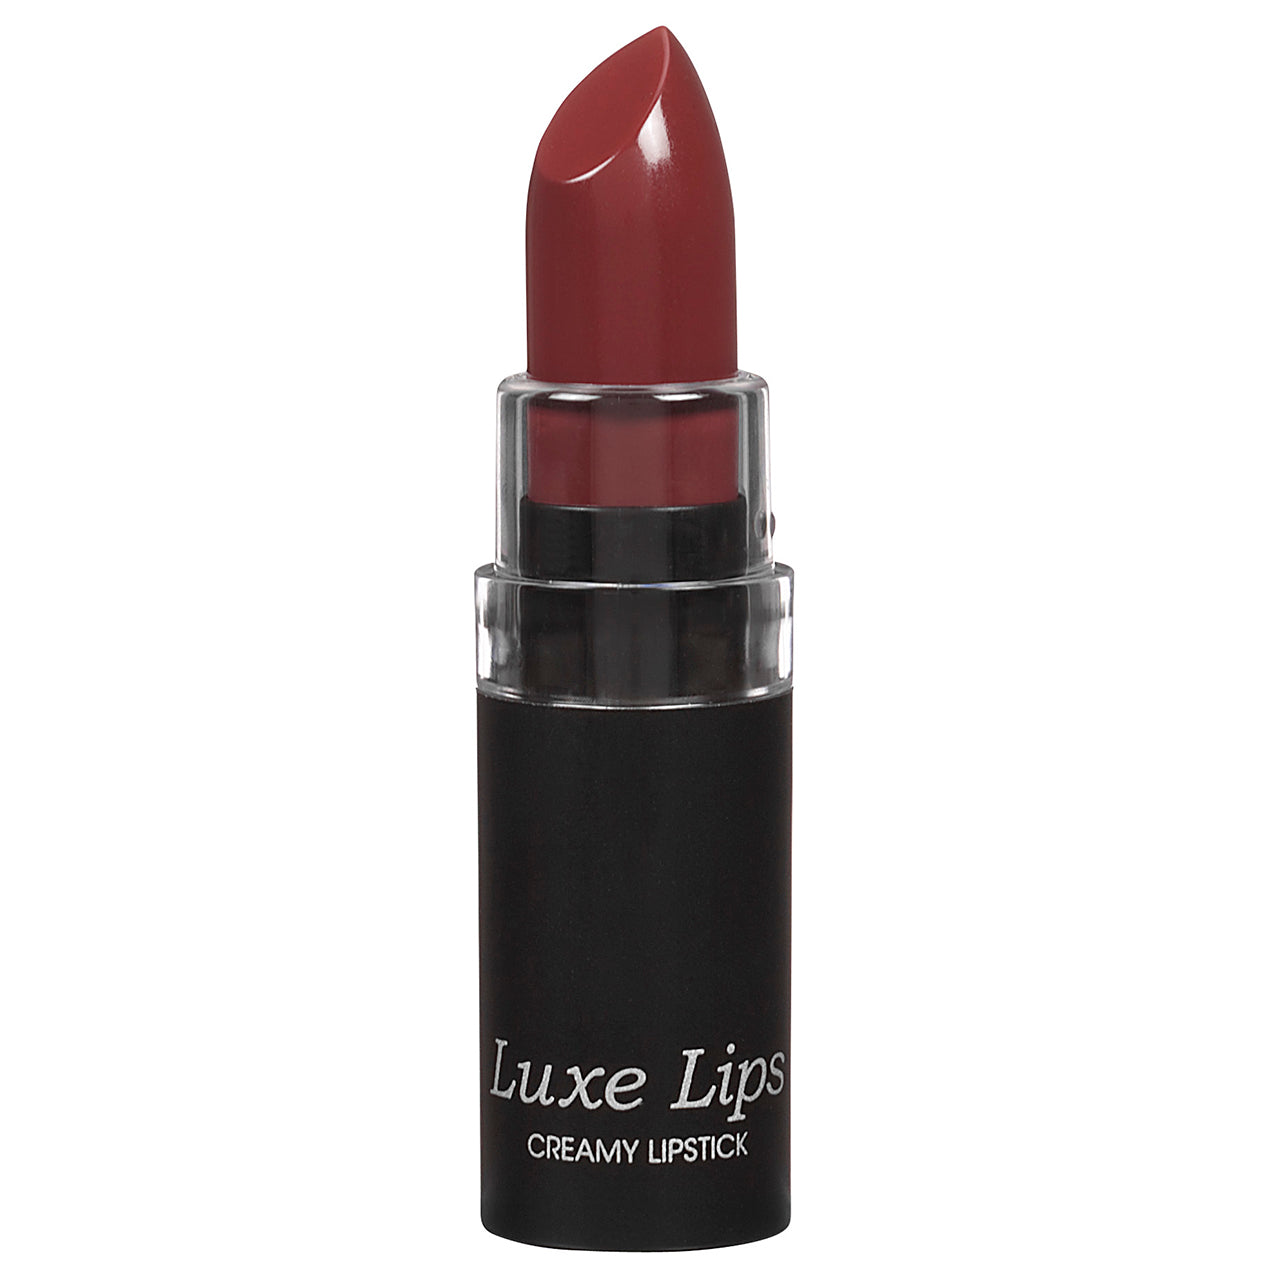 Styli-Style Luxe Lips Creamy Lipstick - Hit the Bricks - ADDROS.COM